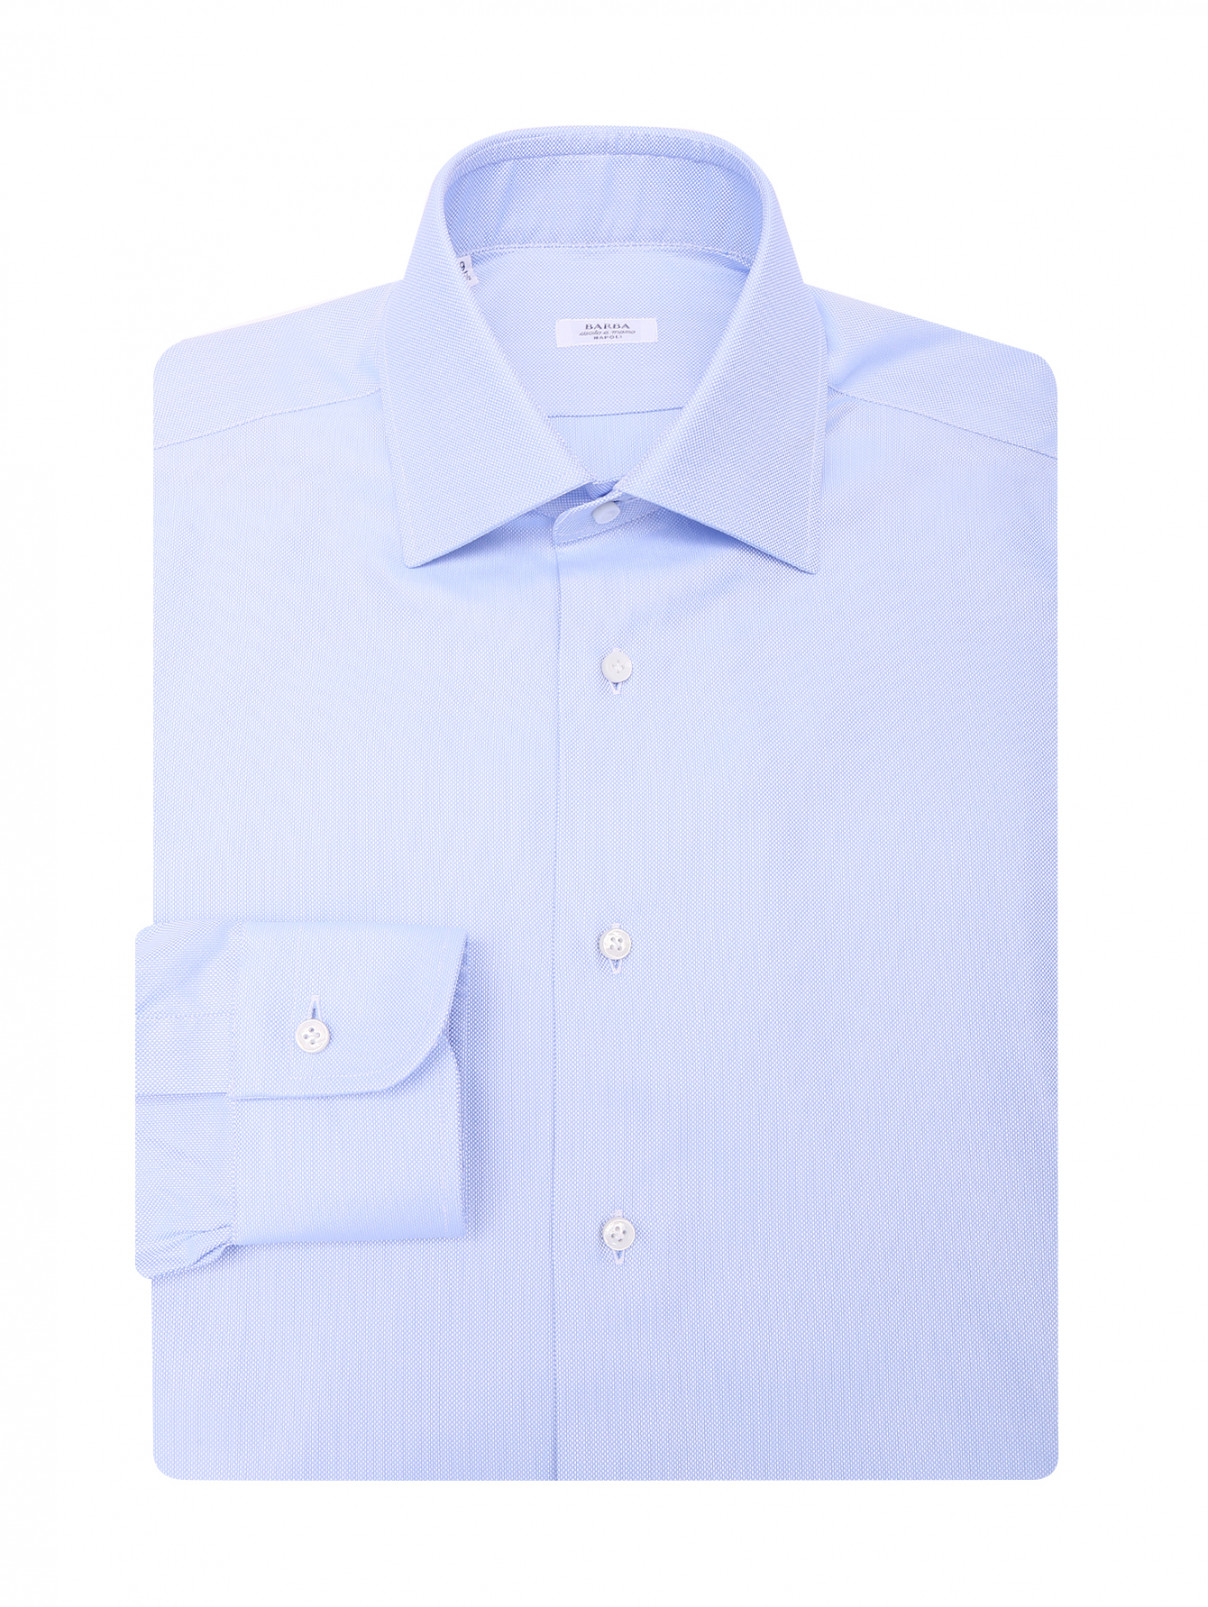 Рубашка из хлопка на пуговицах Barba Napoli  –  Общий вид  – Цвет:  Синий